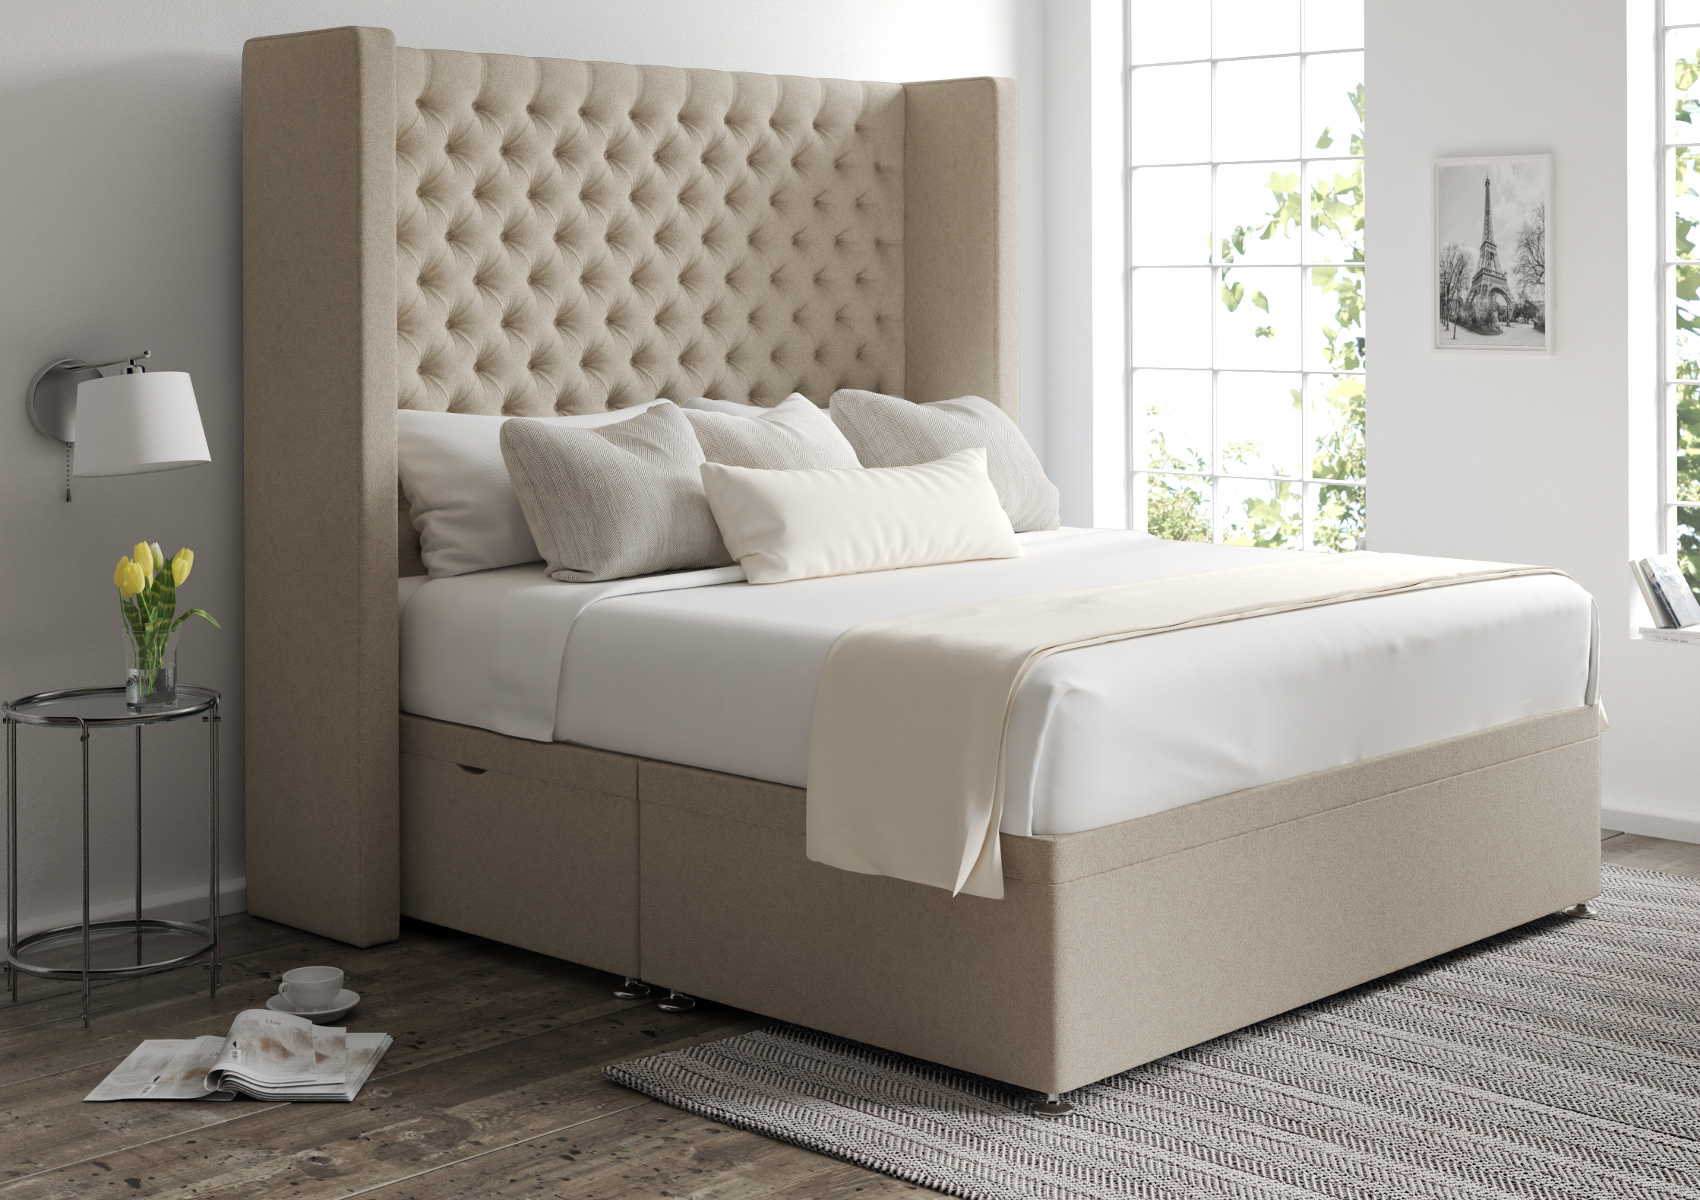 View Emma Trebla Stone Upholstered Double Ottoman Bed Time4Sleep information